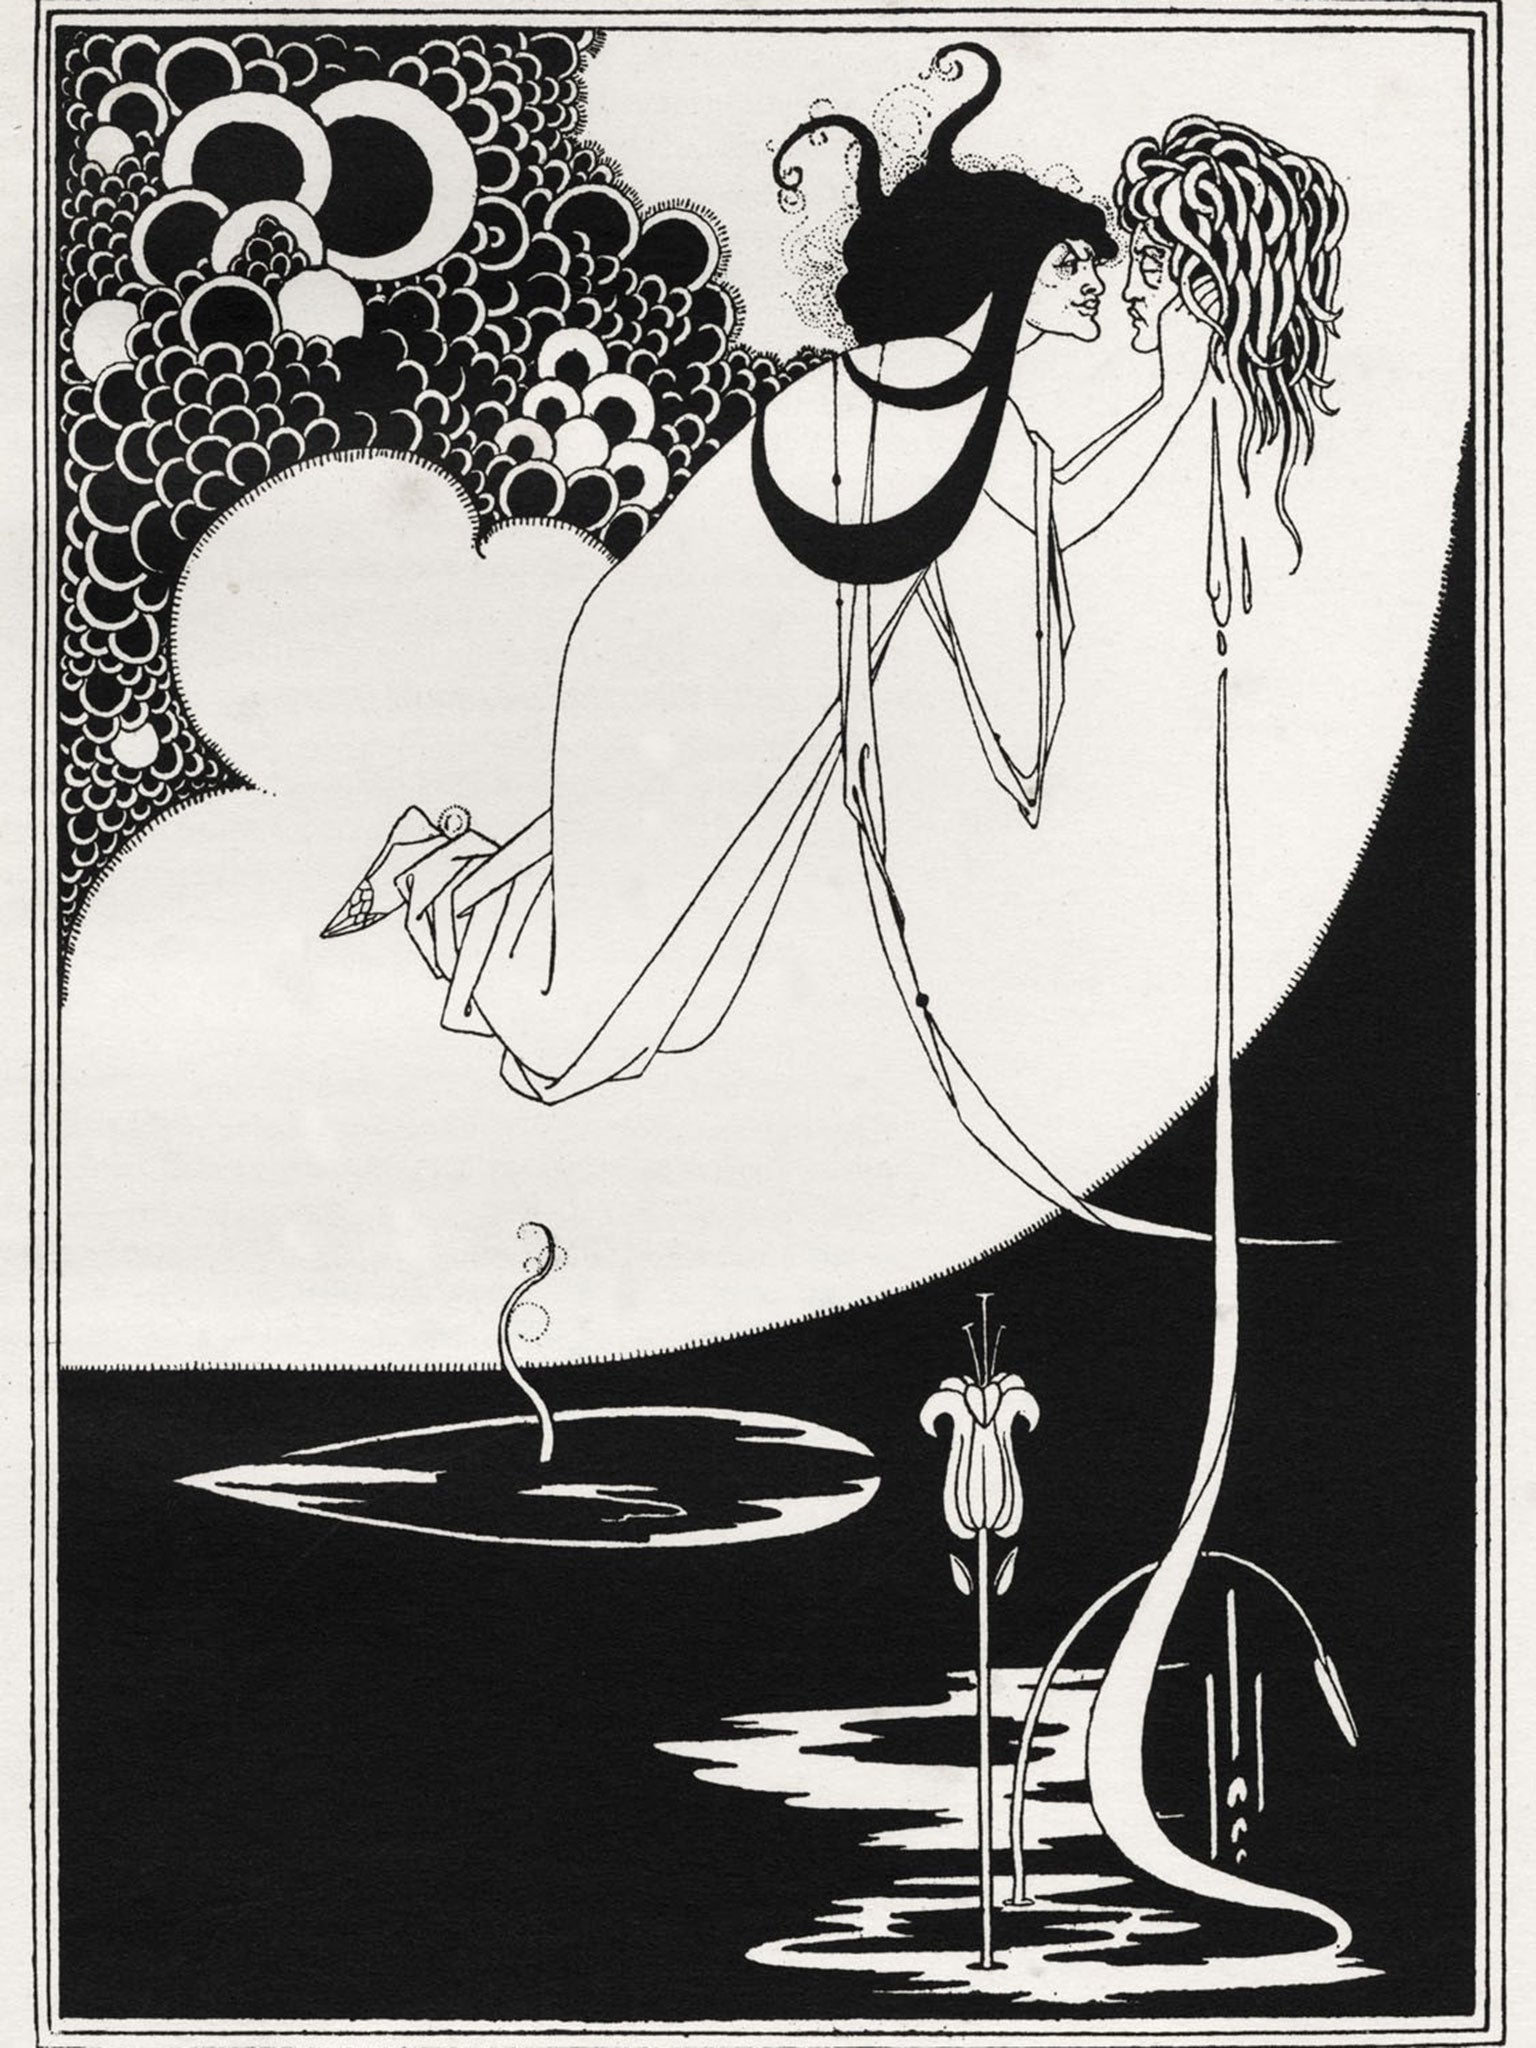 Deadly desire: Aubrey Beardsley's illustration for Wilde's play